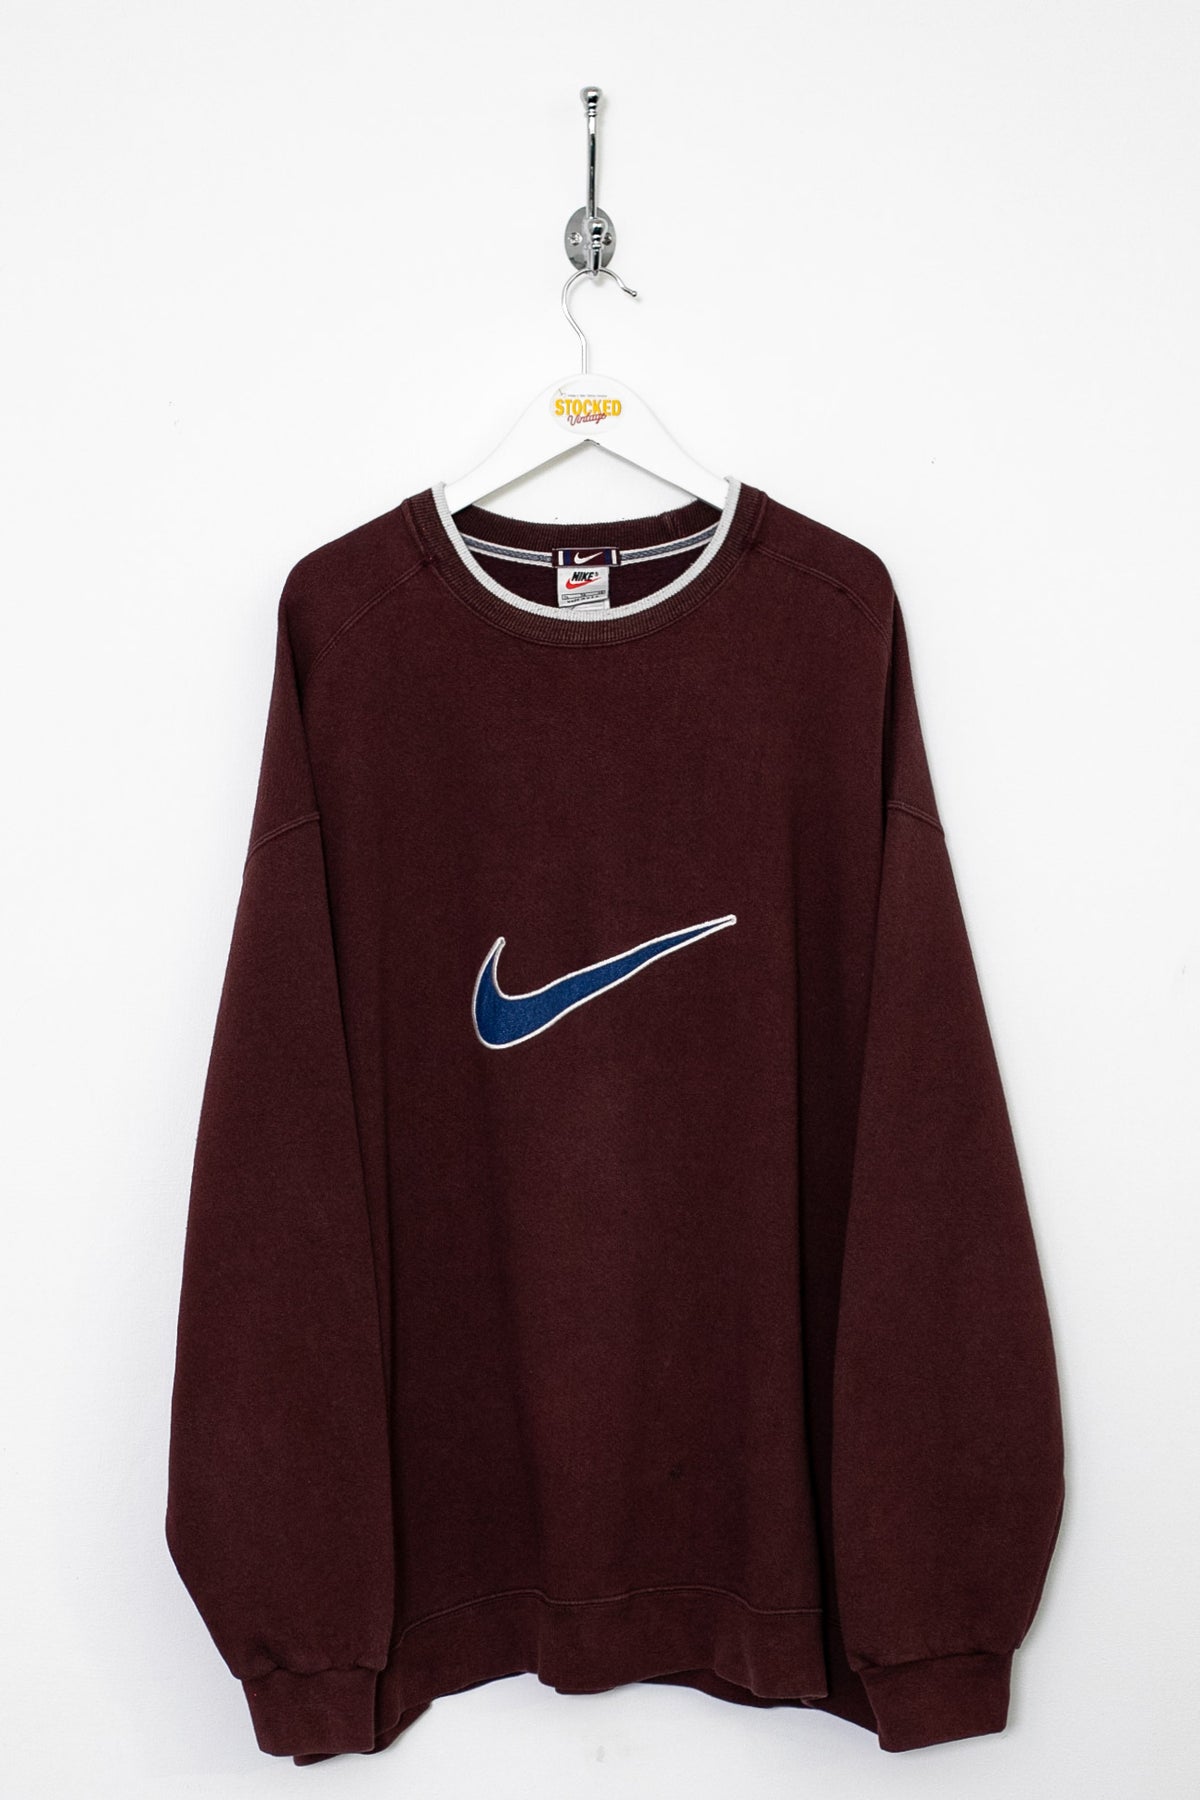 Rare 90s Brown Nike Sweatshirt (XL)